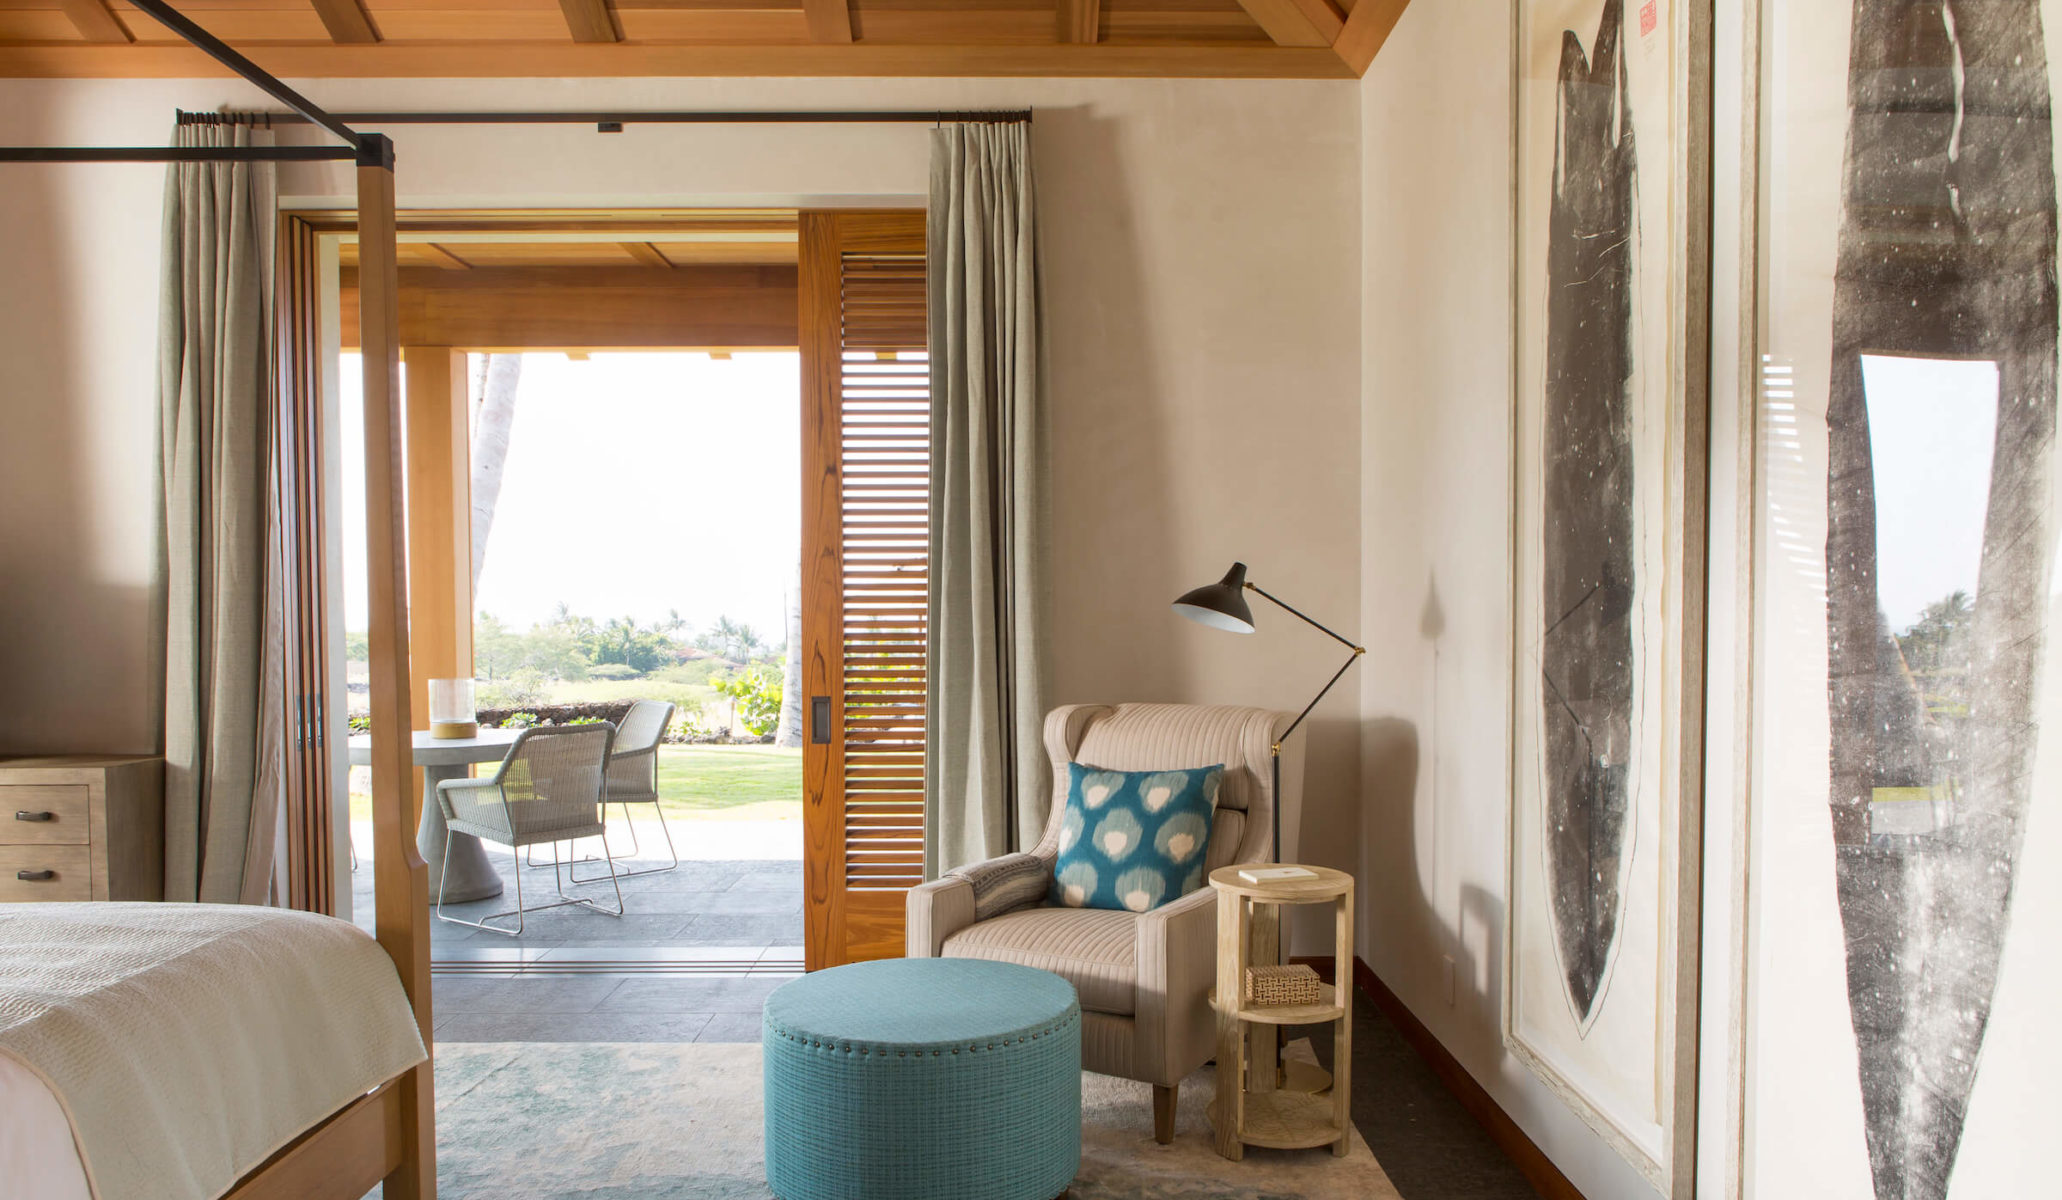 Luxury Hawaiian vacation home interior design services by Tim Clarke Design Studio